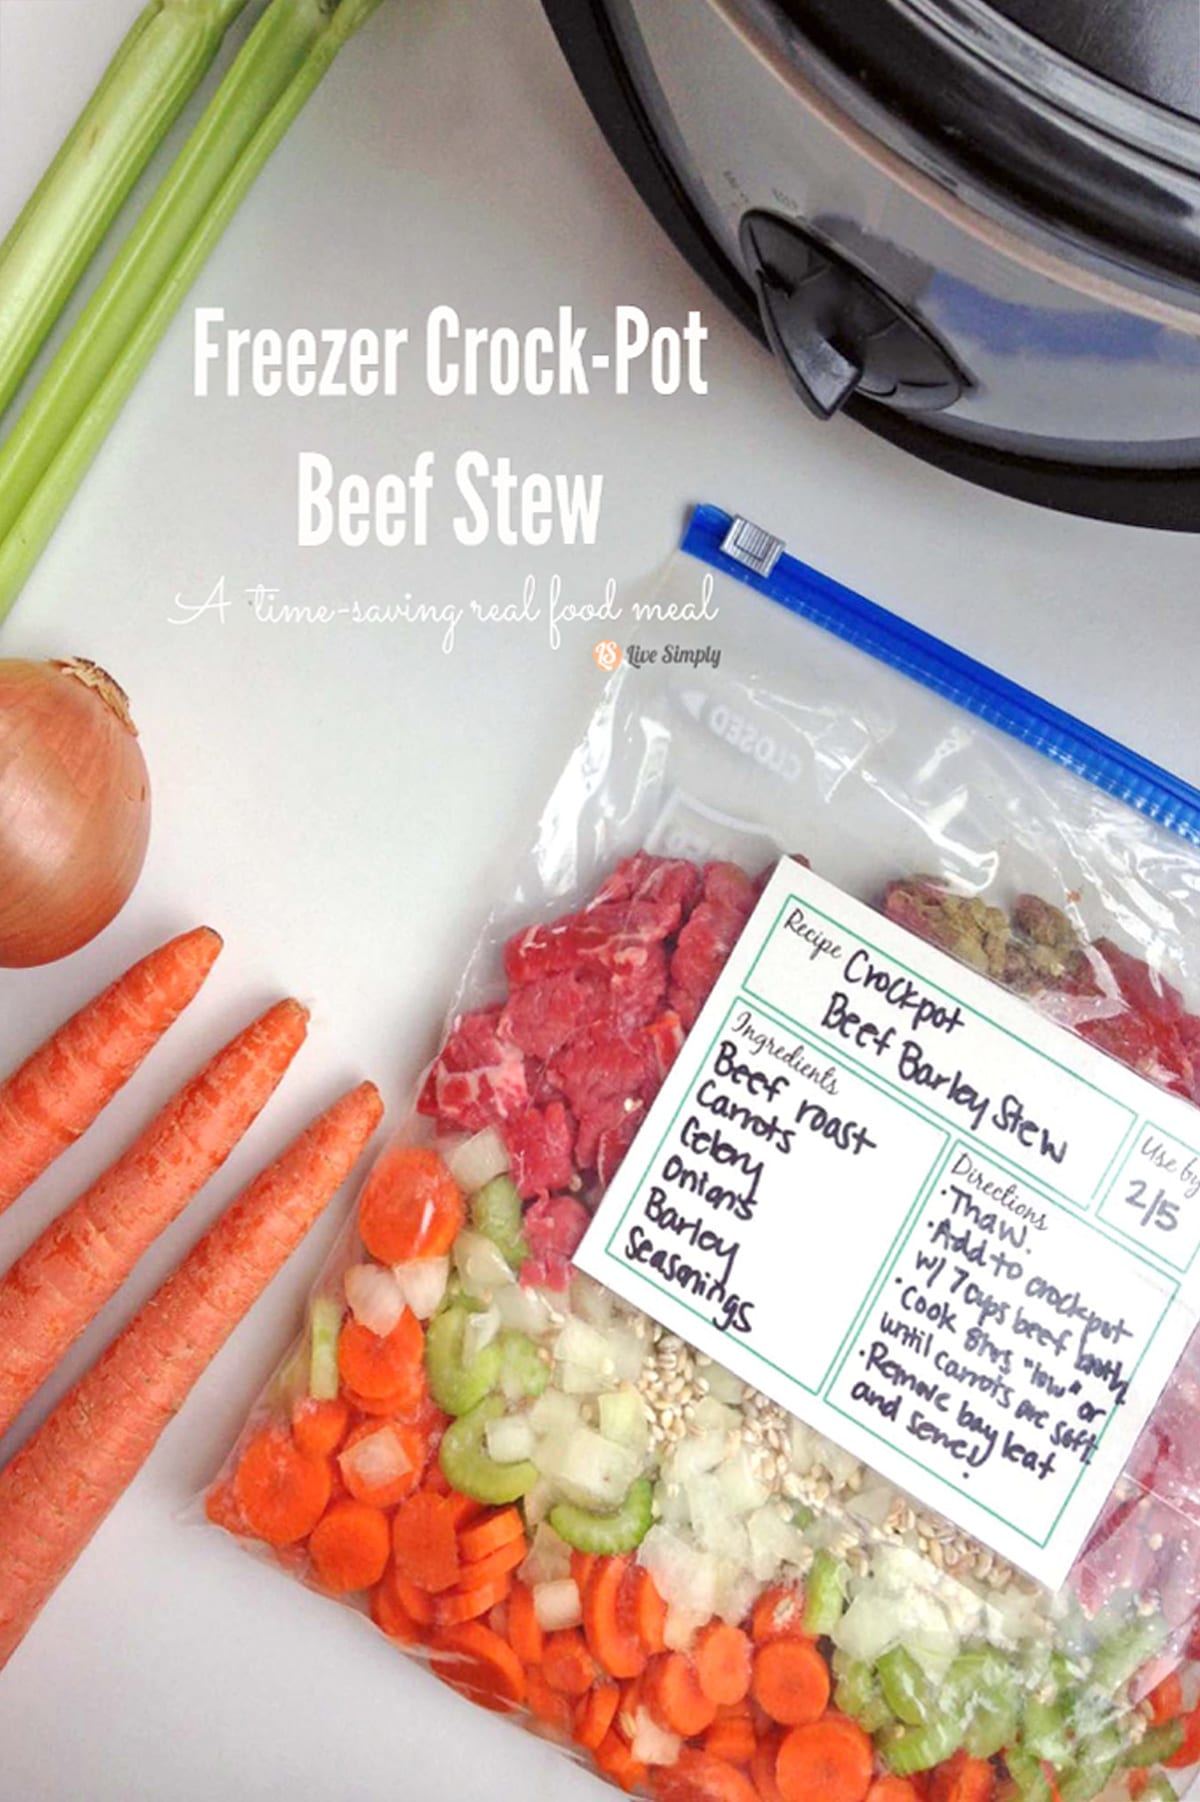 Freezer Crock-Pot Beef Stew